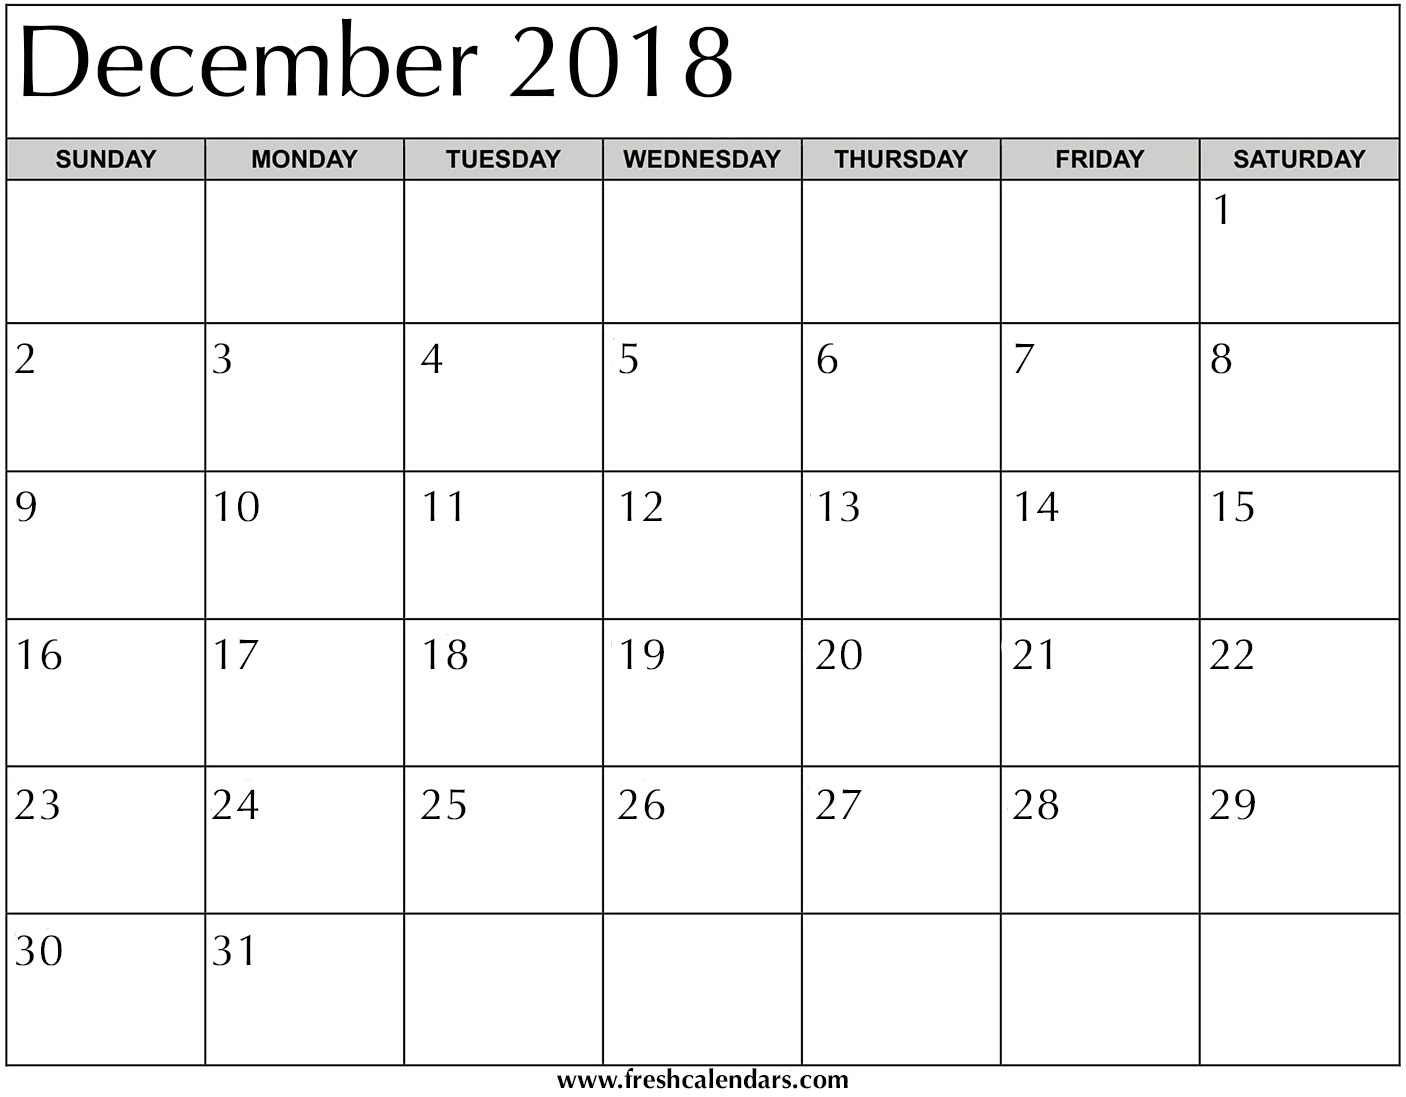 December 2018 Calendar Printable - Fresh Calendars with Free Calendar Templates For The Blind